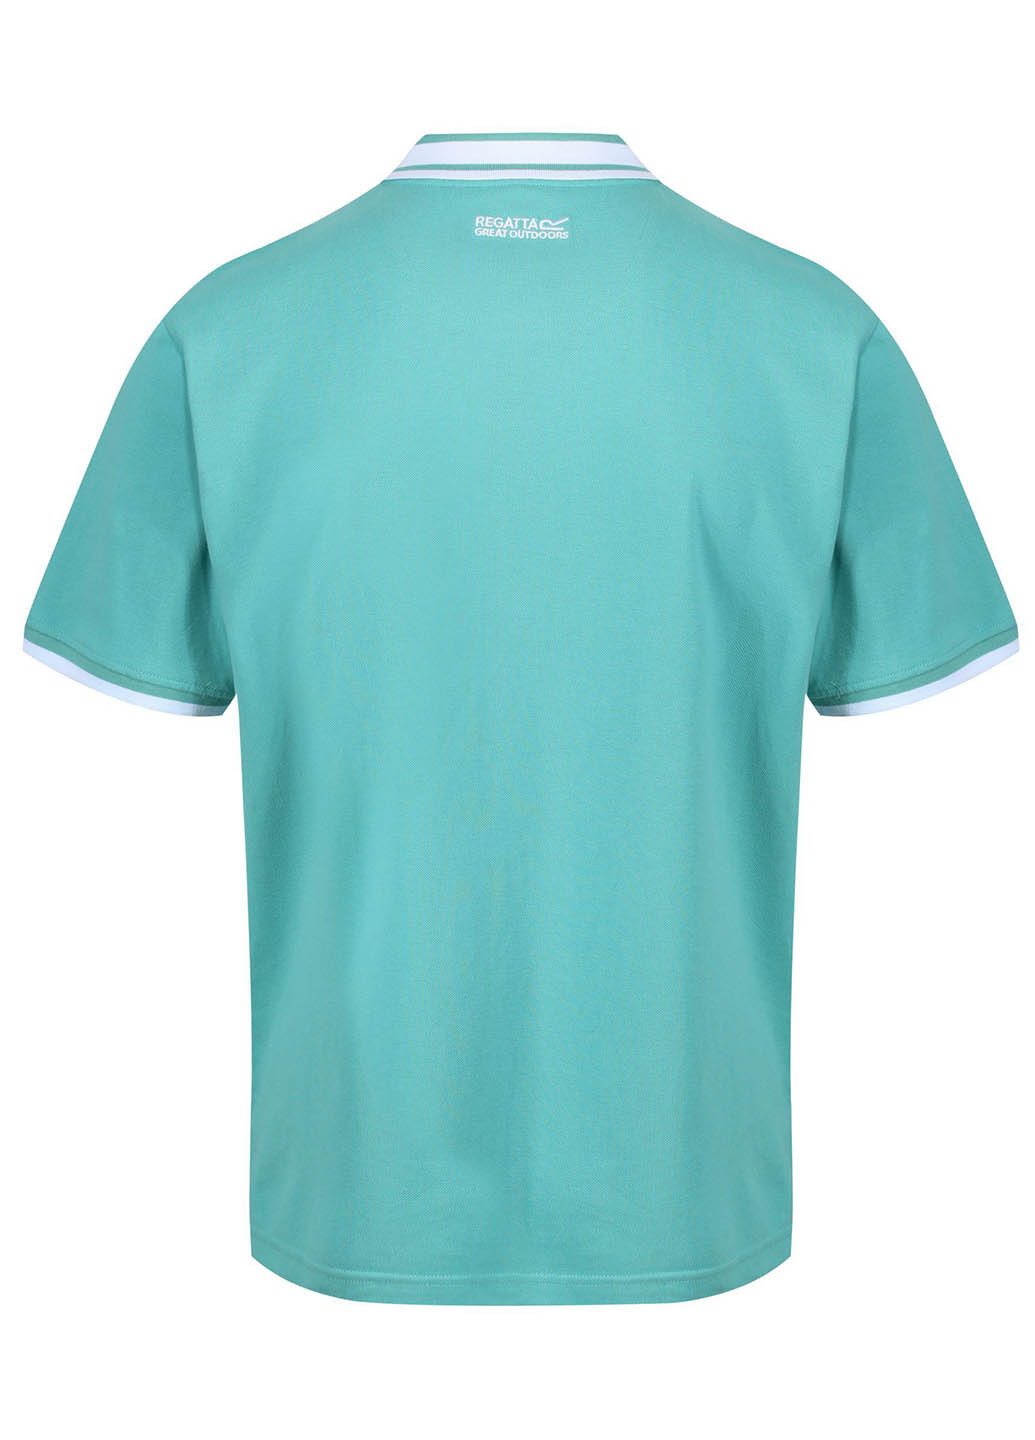 Бирюзовая футболка-поло для мужчин Regatta с геометрическим узором